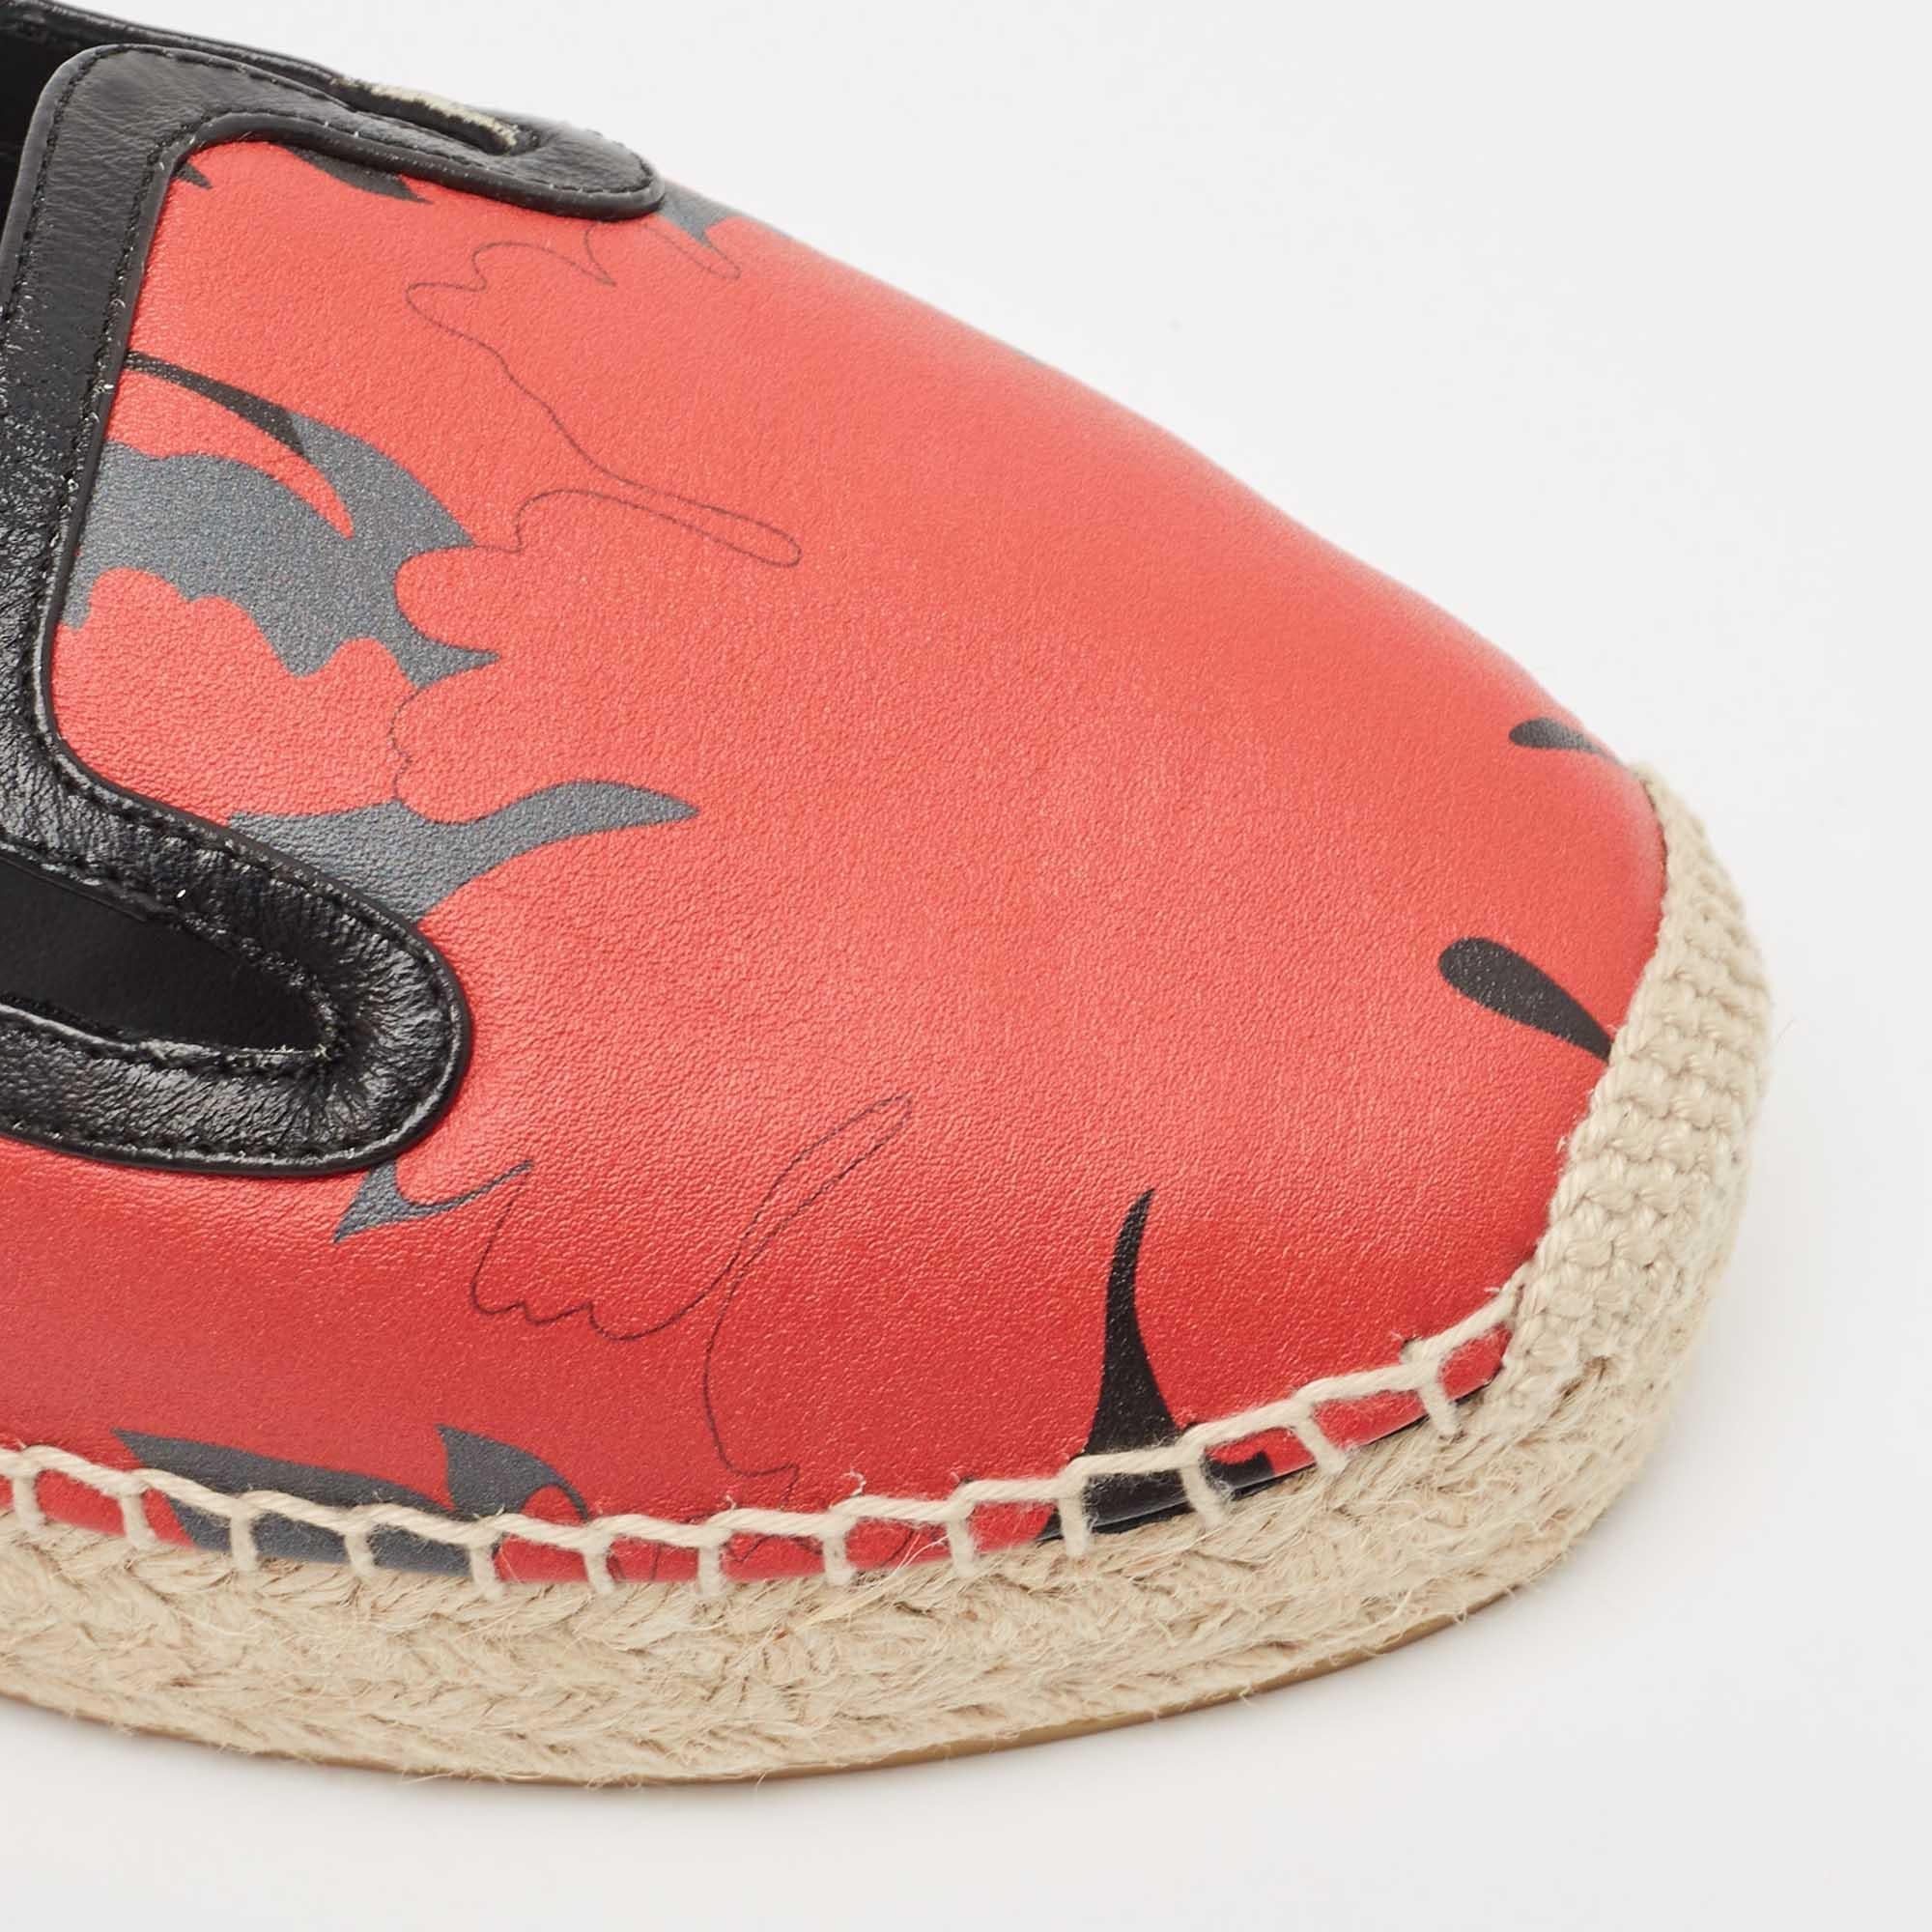 Alexander McQueen Tricolor Leather Espadrille Flats Size 40 2